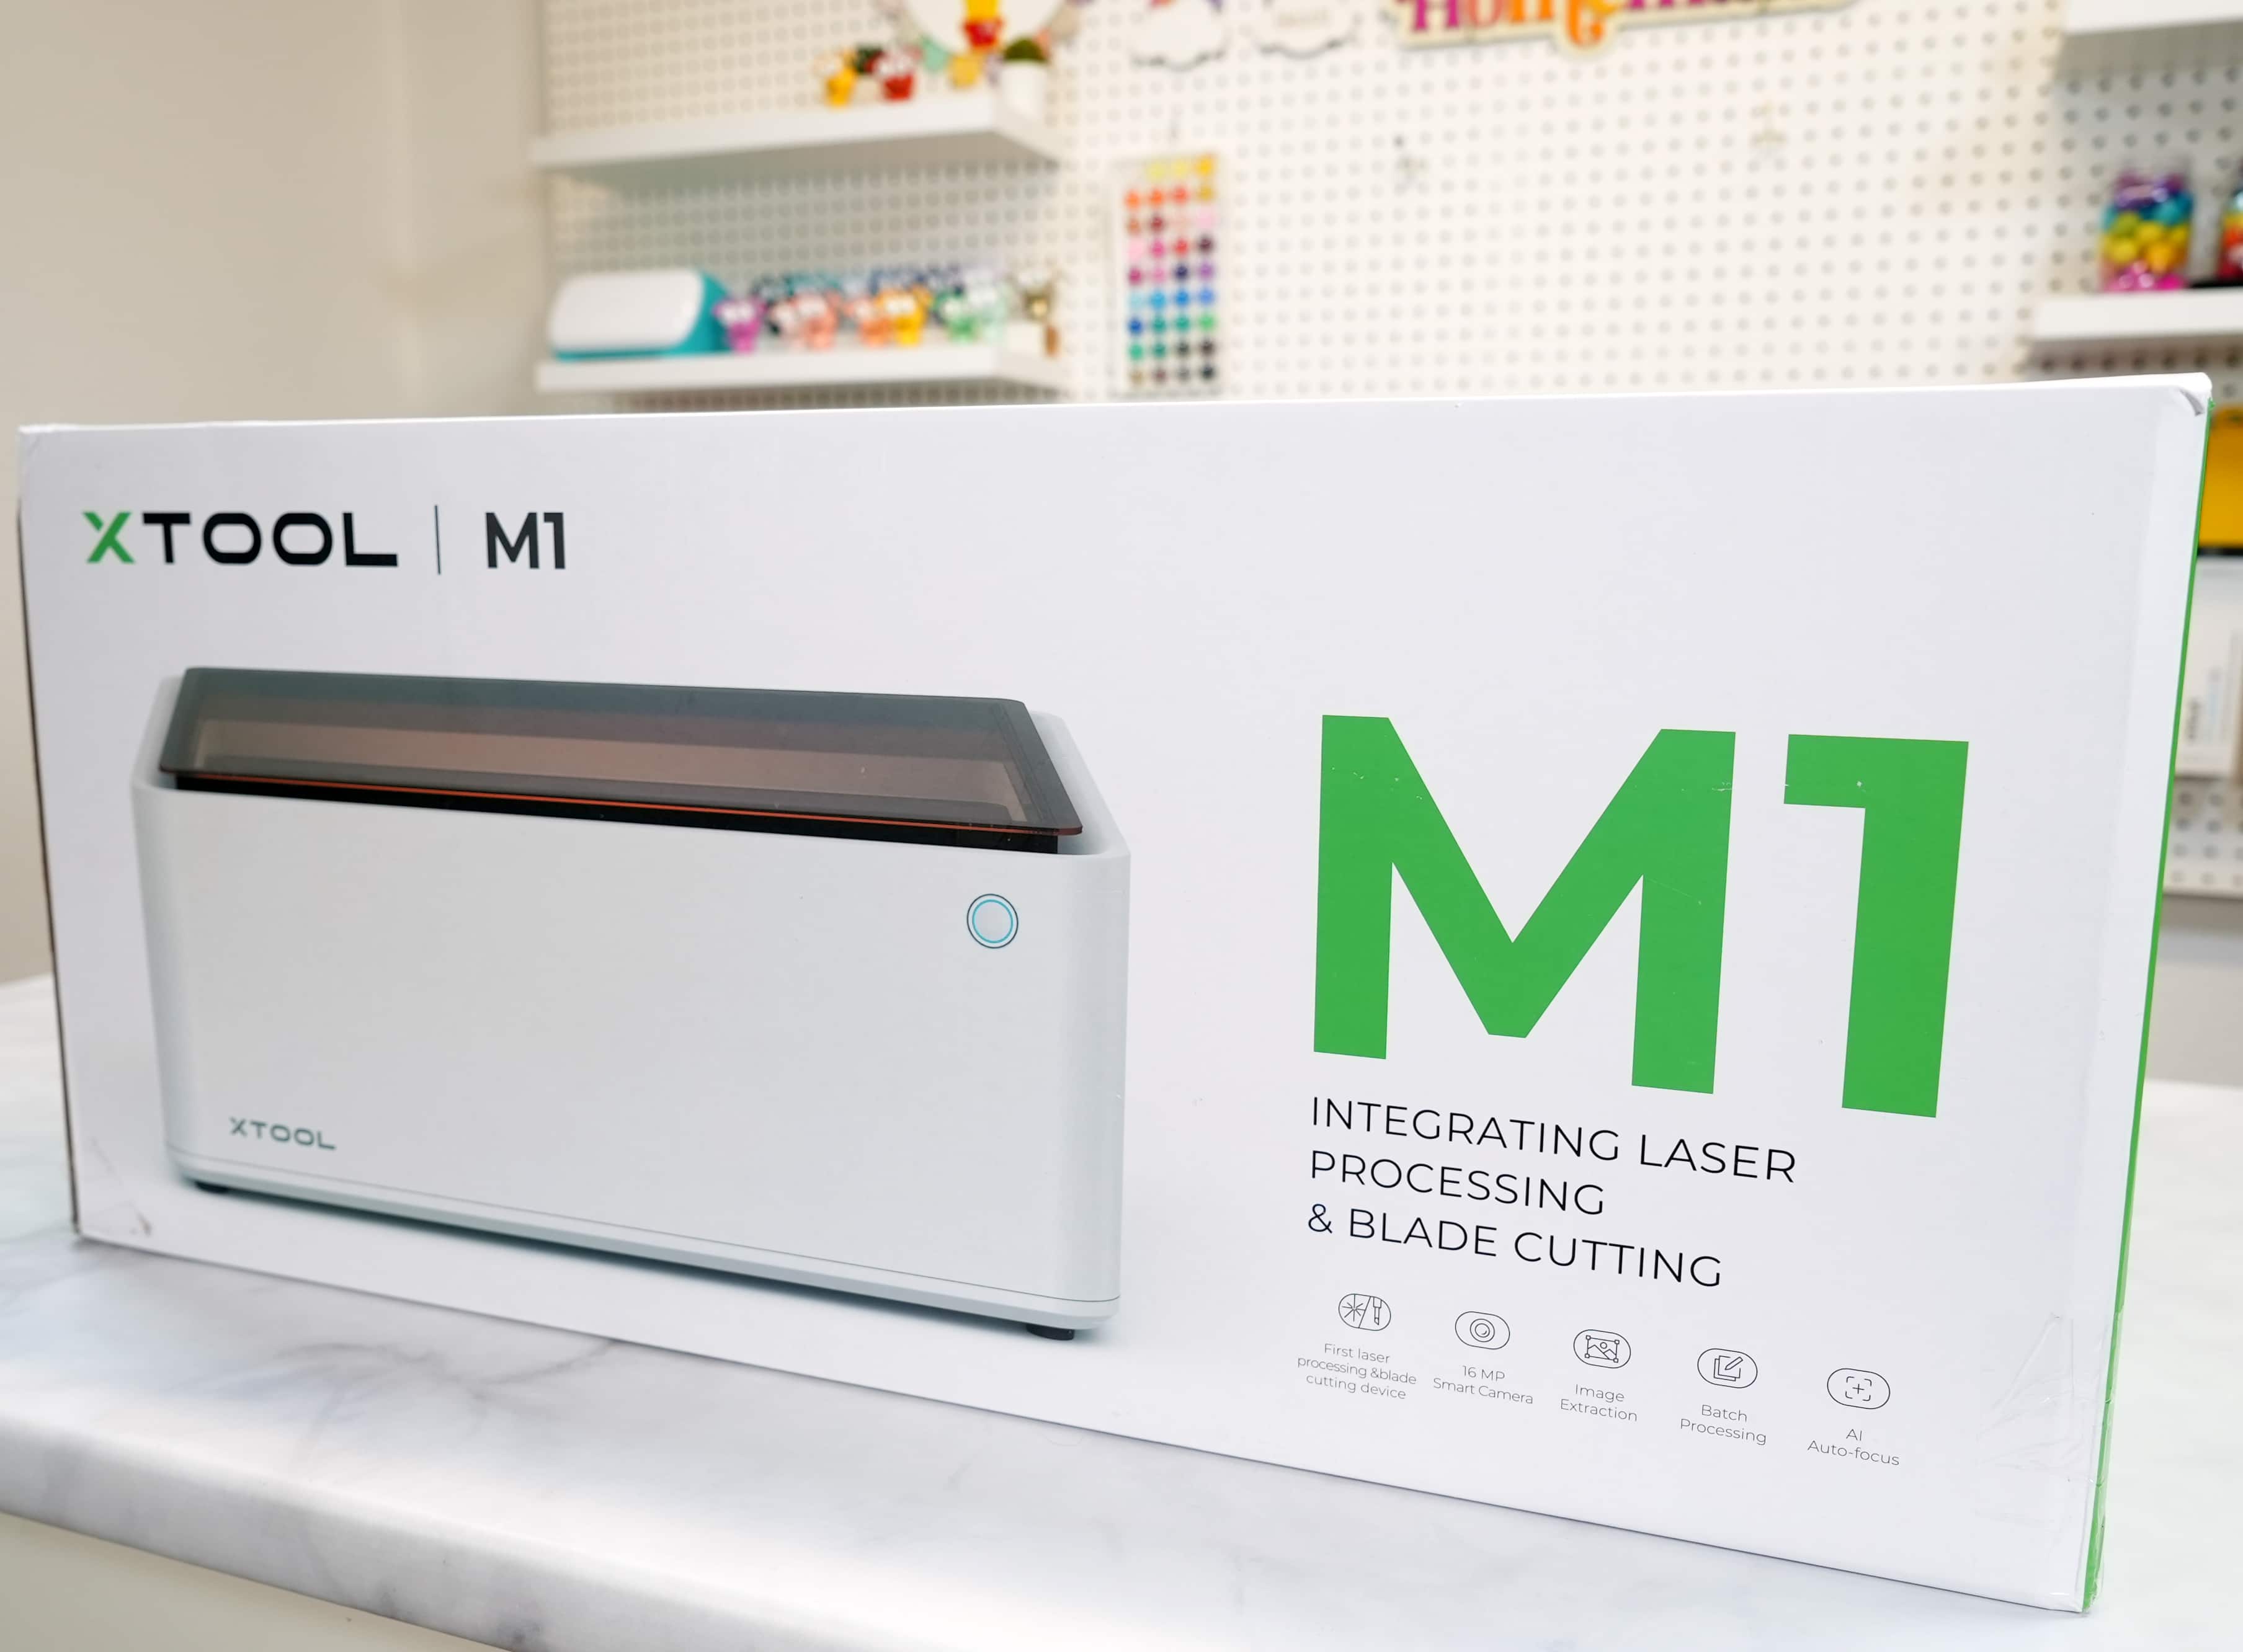 xTool M1: The Ultimate Gift-making Laser & Blade Cutting Machine